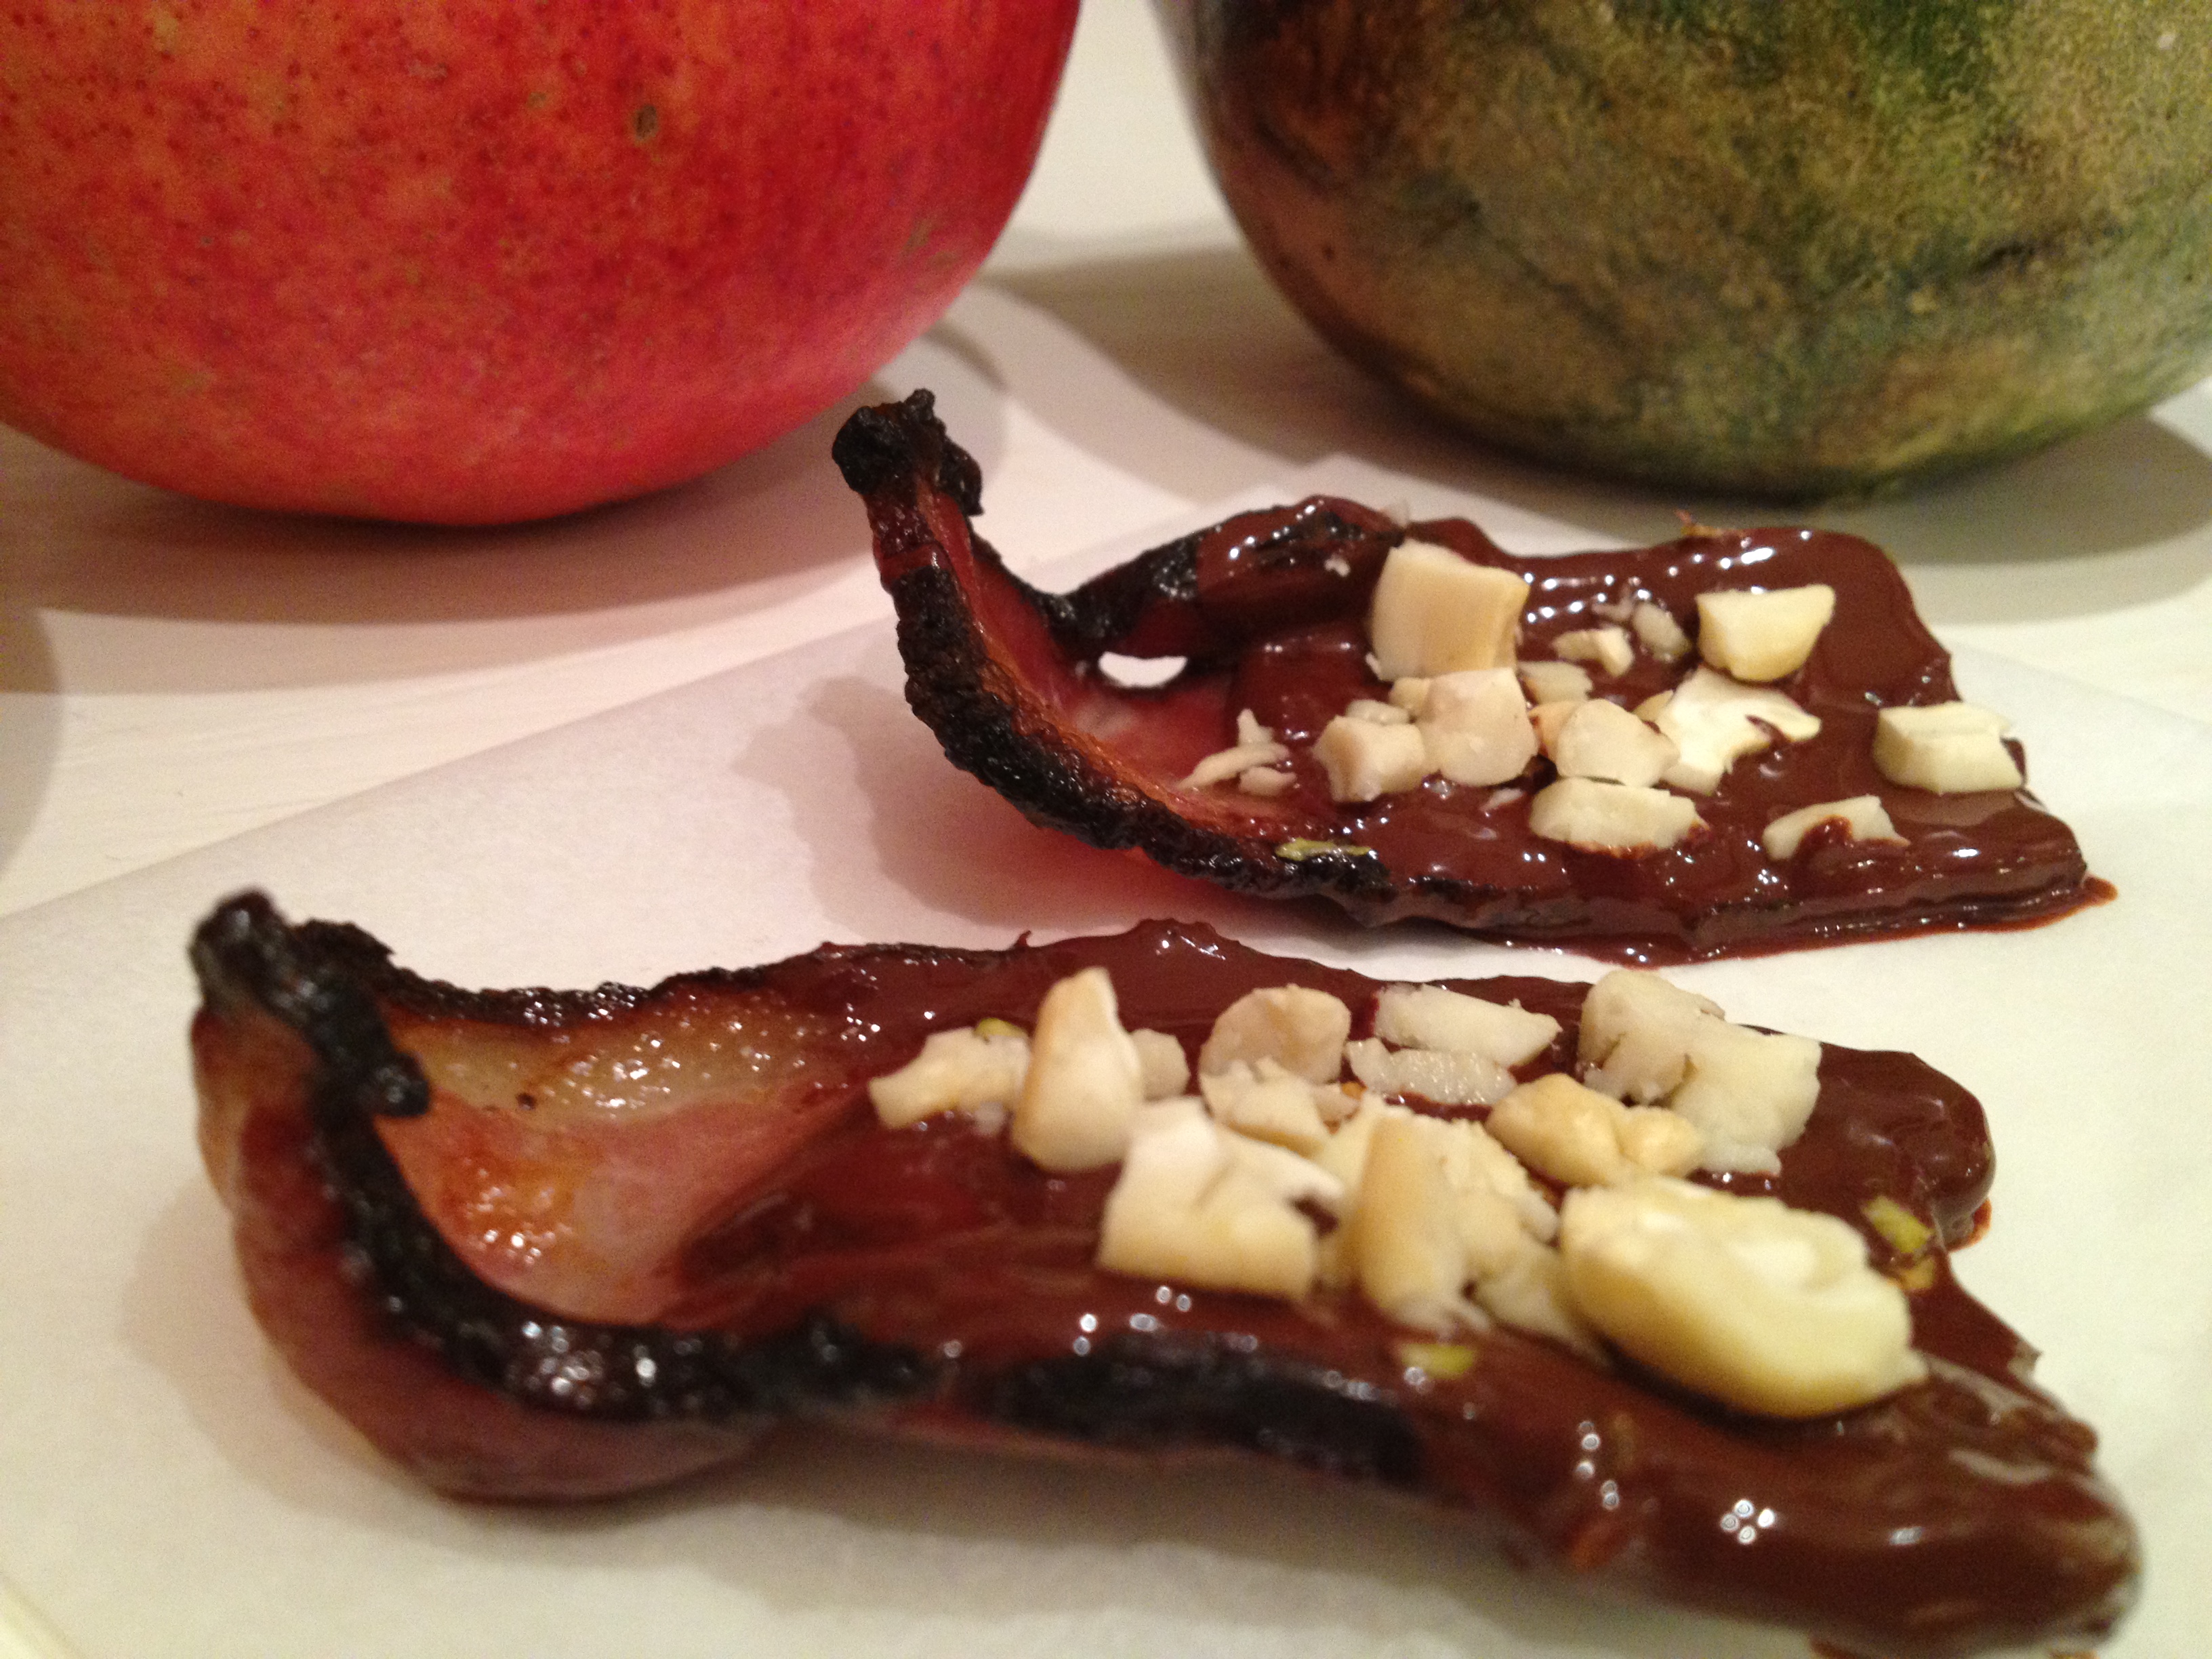 Paleo Meets Chocolate, Bacon and Macadamia–Holy Cow!